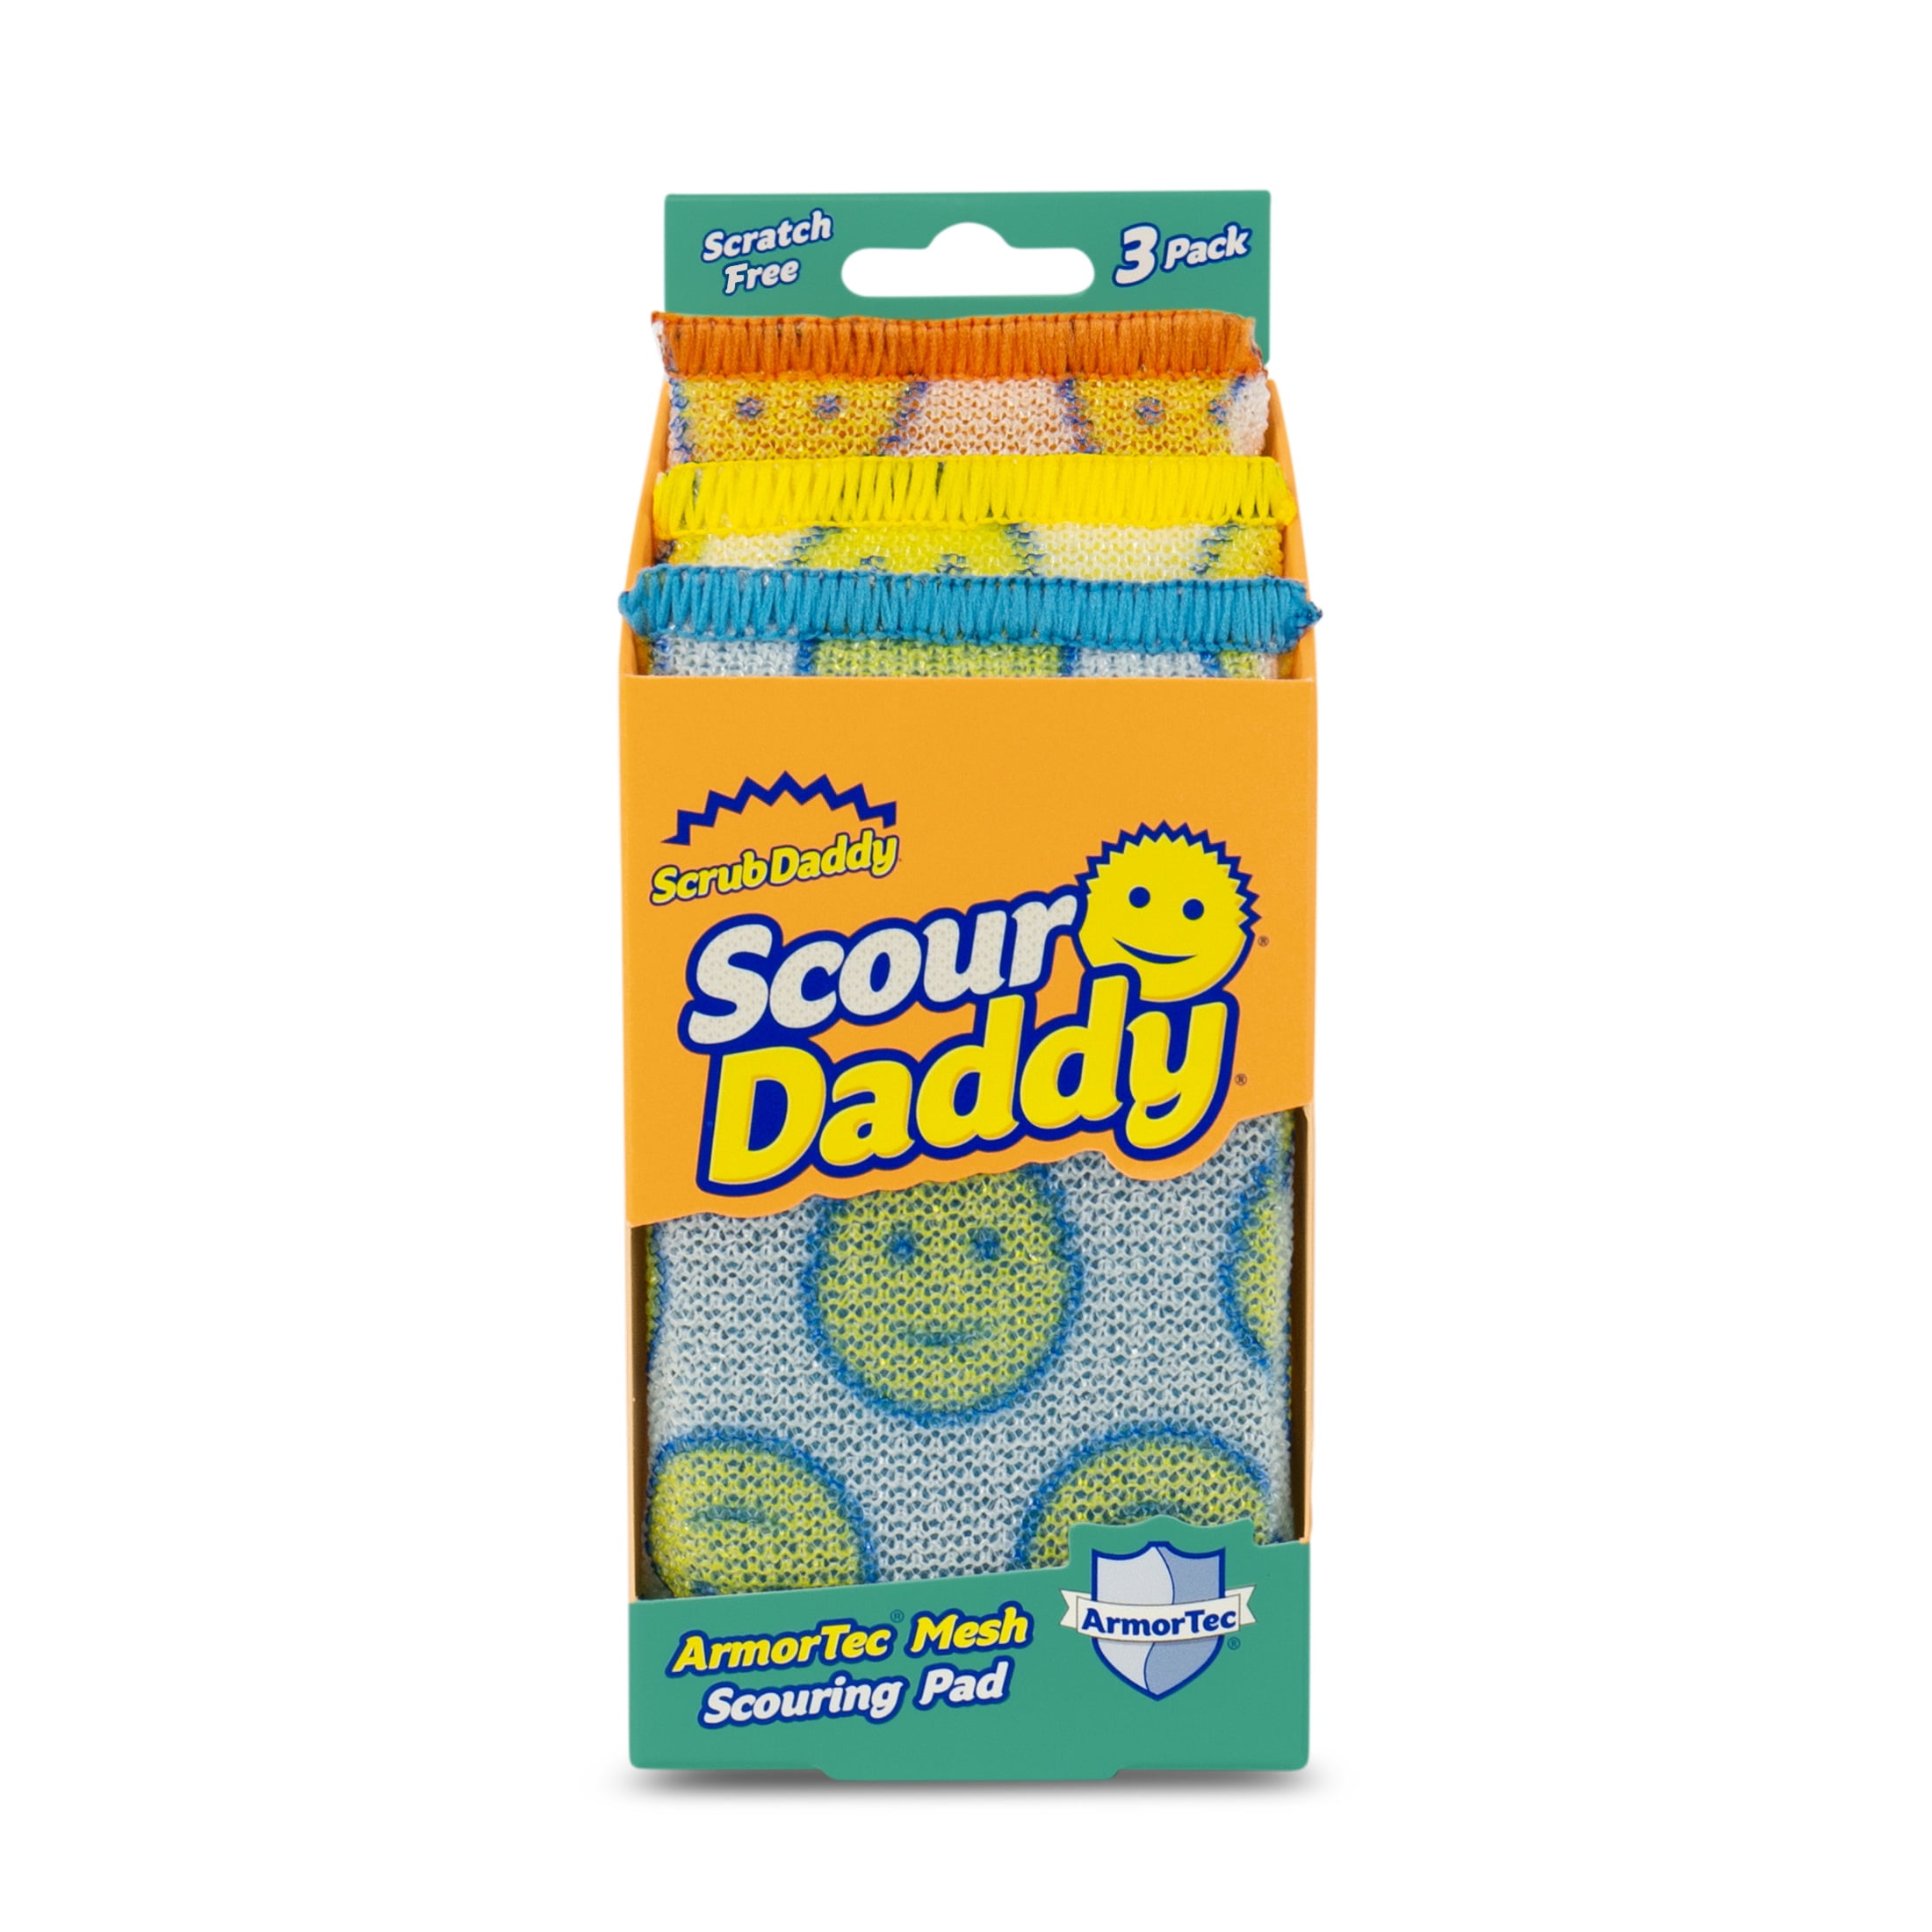 Scrub Daddy® Scour Daddy Mesh Scouring Pad, 3 pk - Kroger